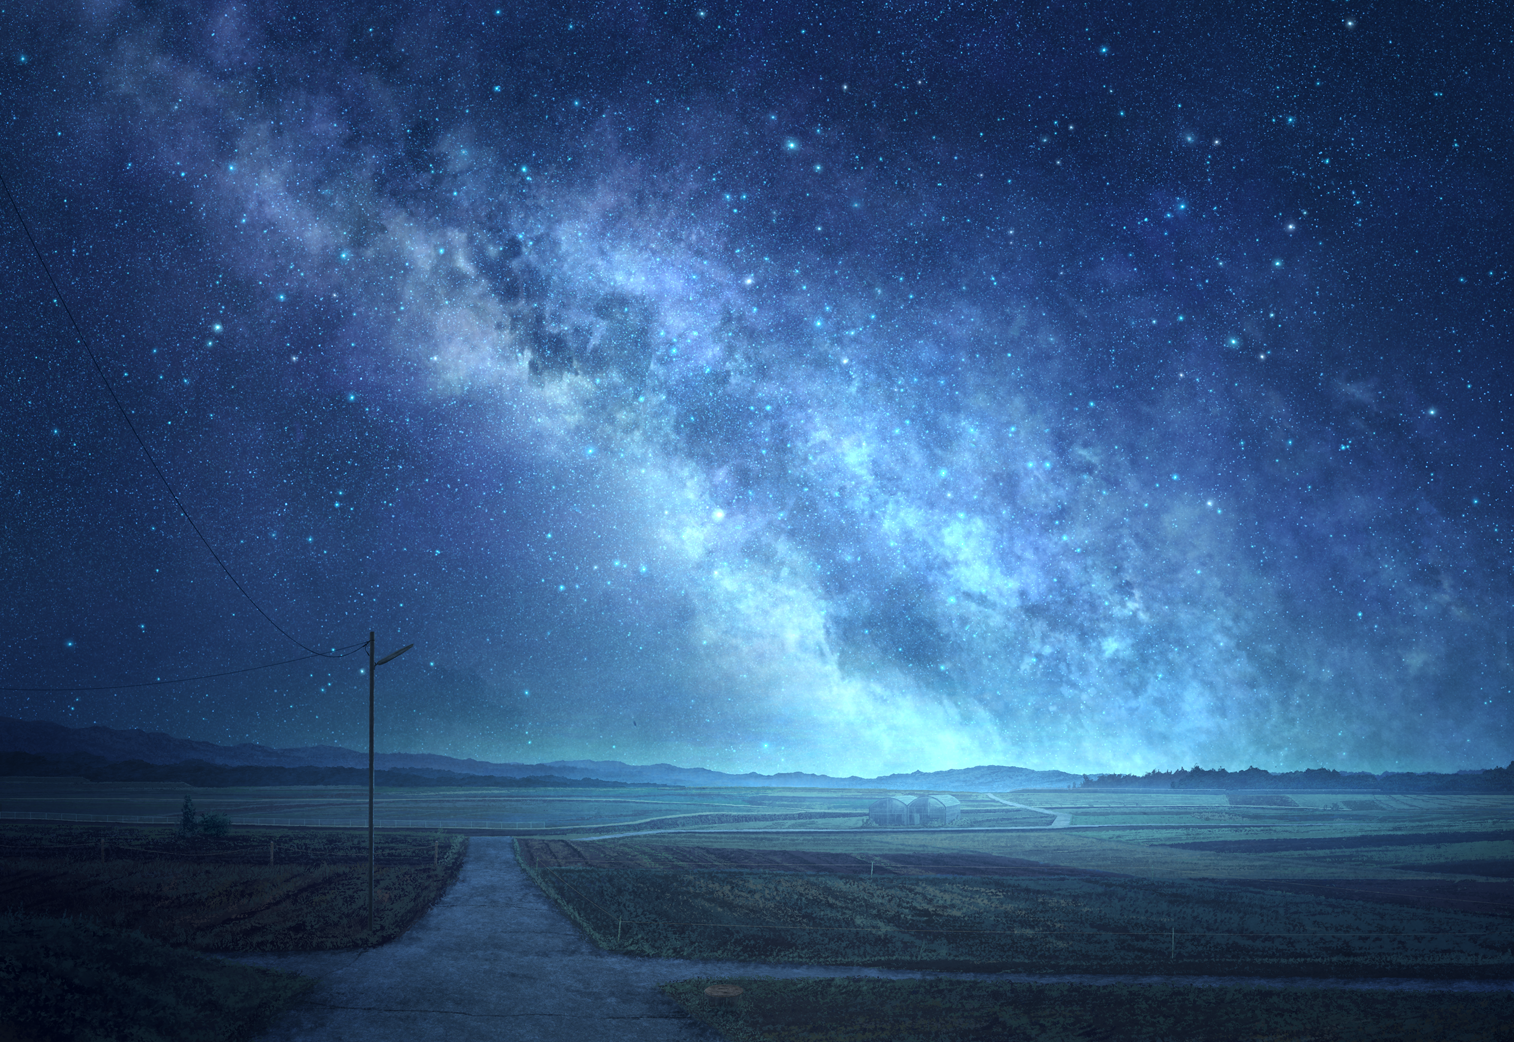 Artwork Digital Art Landscape Mks Sky Stars Field Night Milky Way 1514x1042